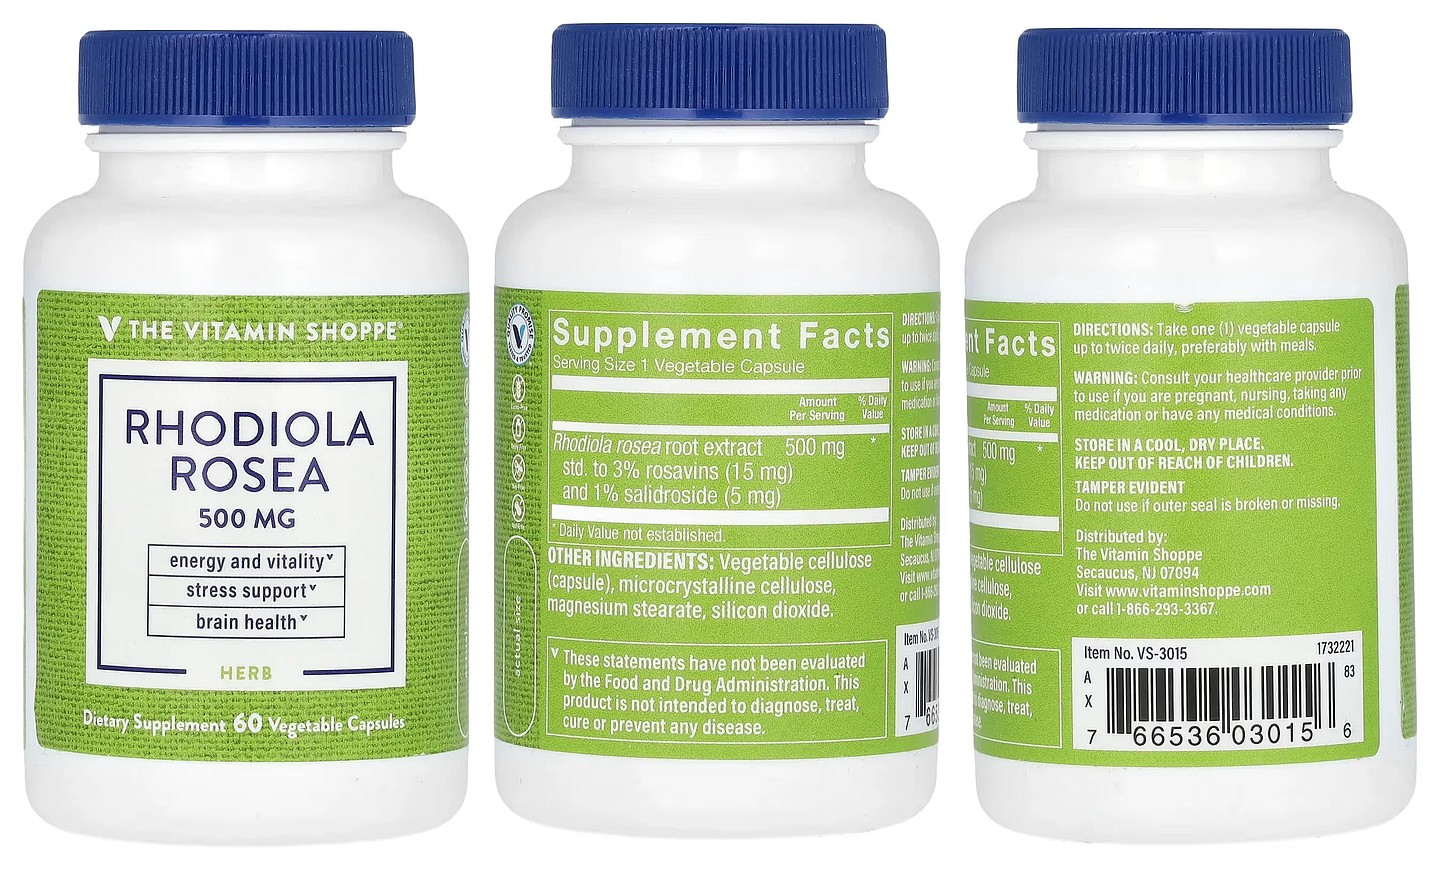 The Vitamin Shoppe, Rhodiola Rosea packaging